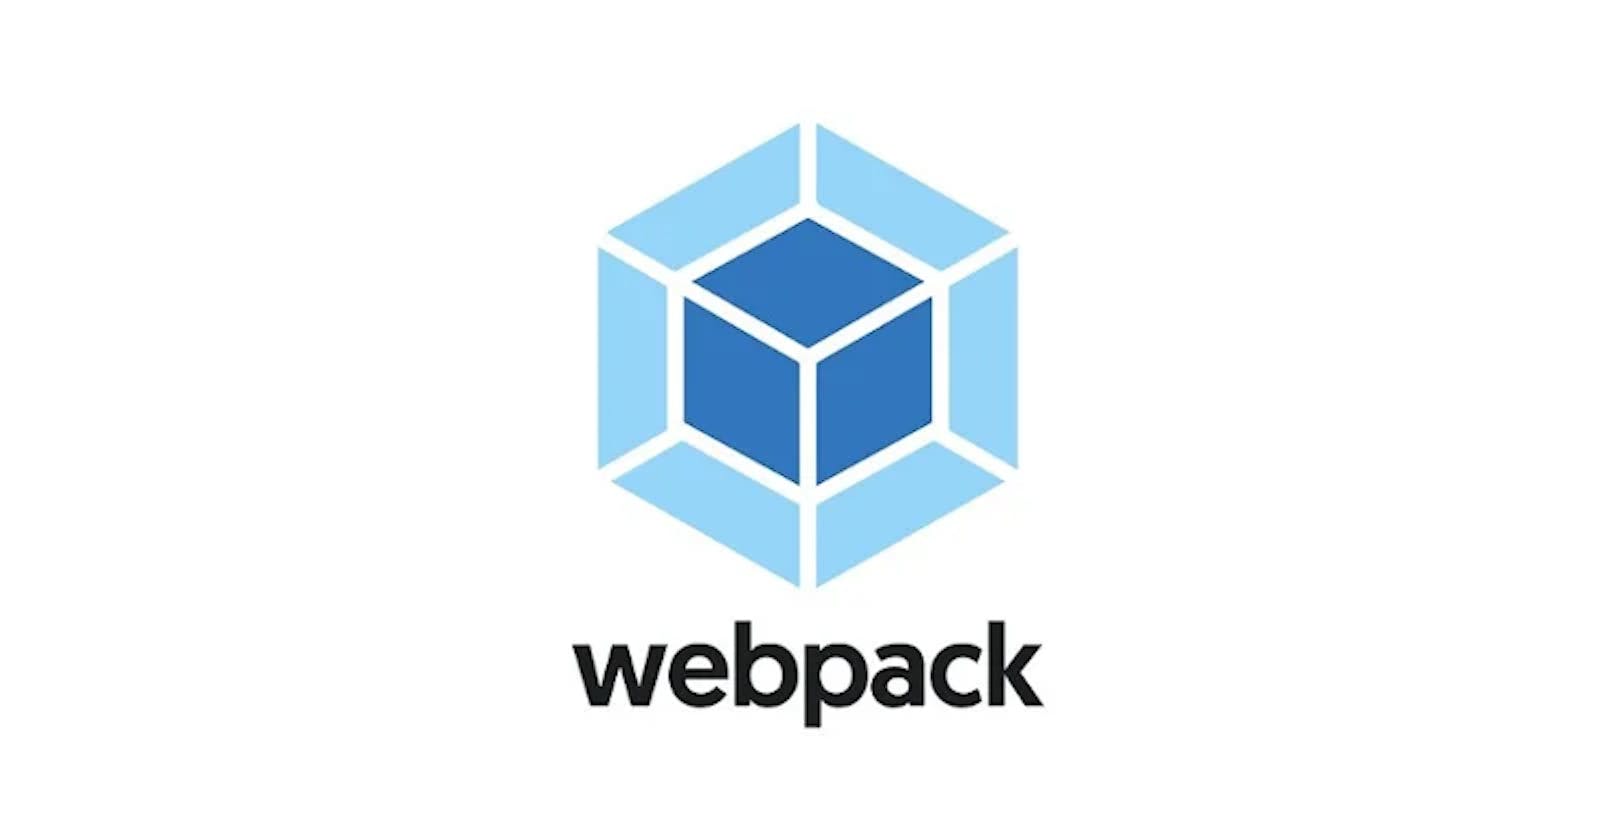 Setup webpack for simple web application.